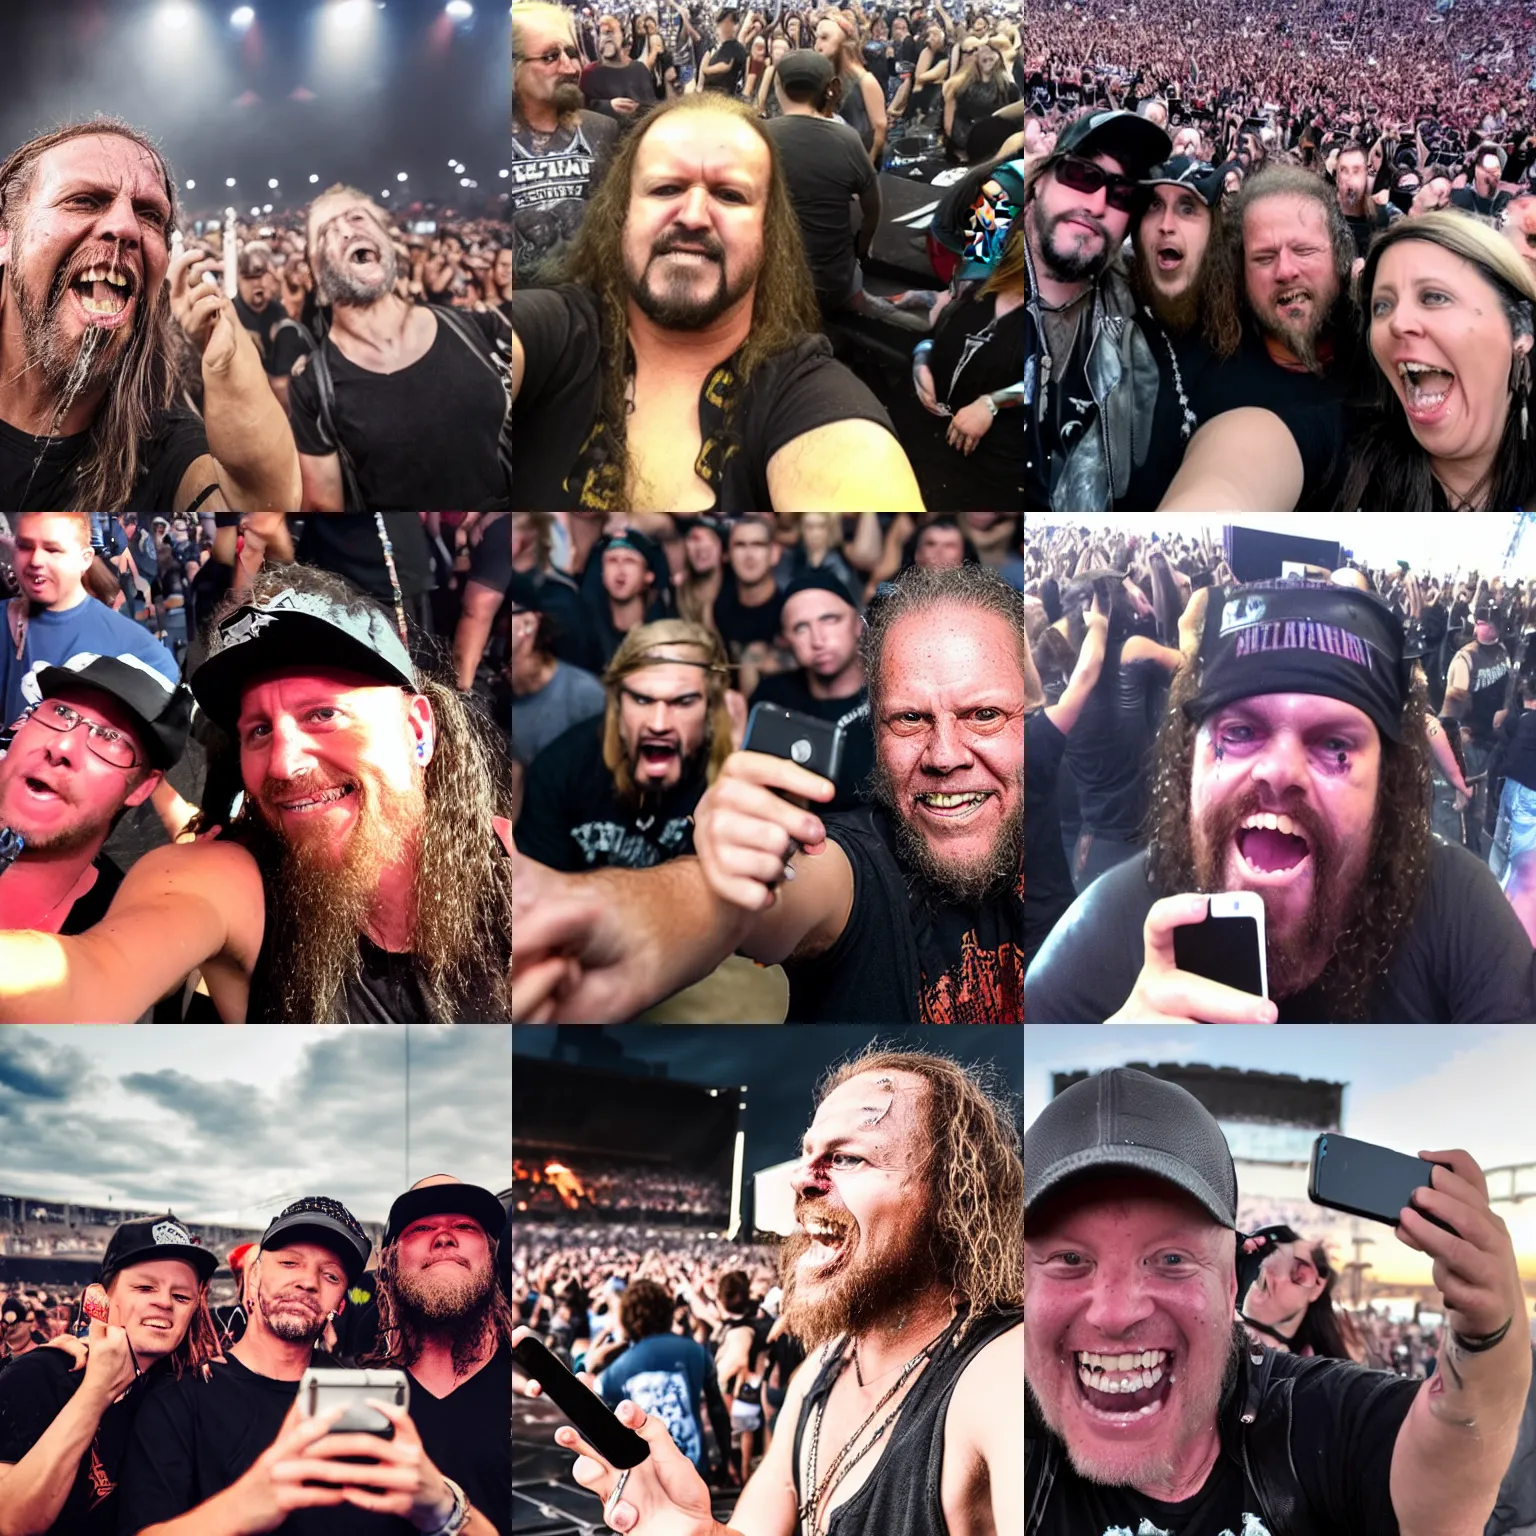 Prompt: sweaty metal-head taking a selfie at a Metallica concert